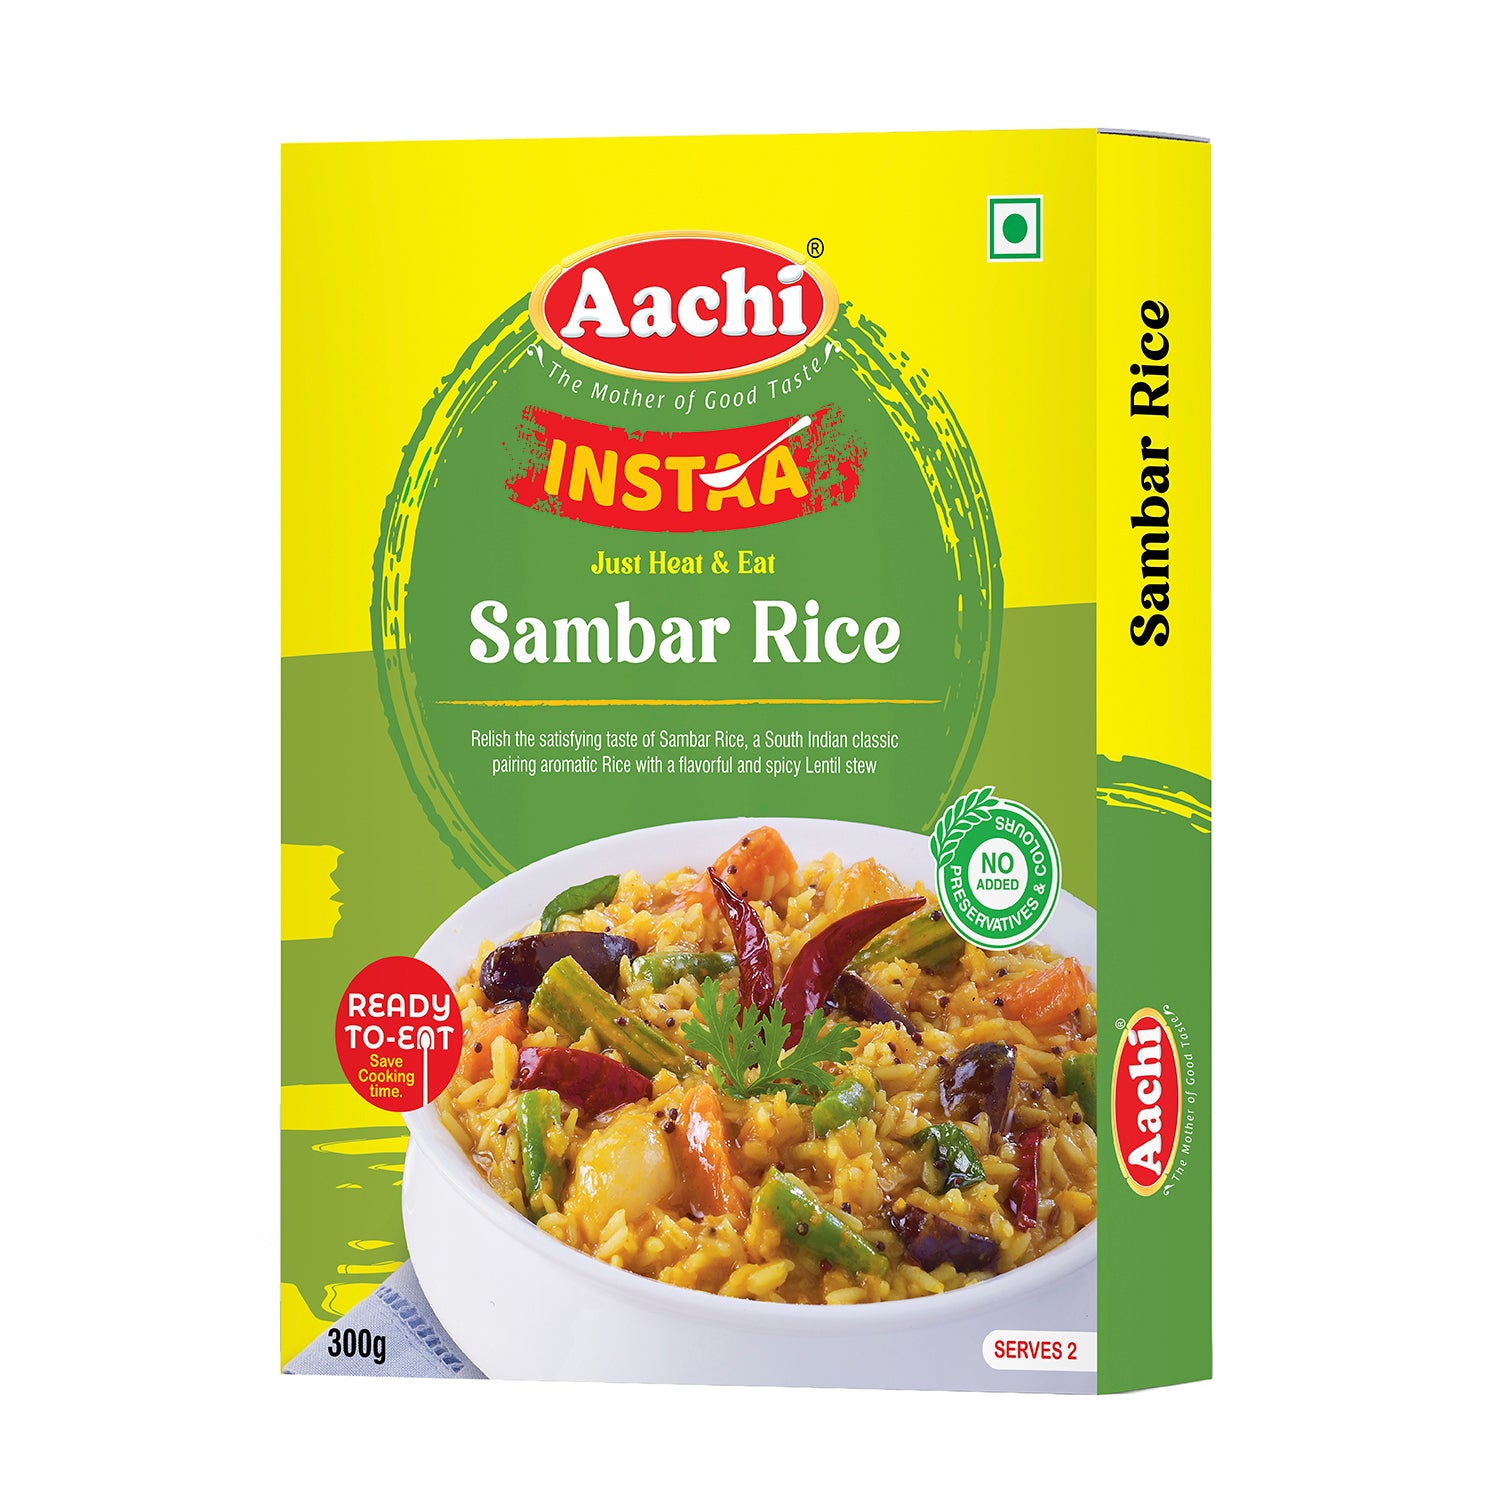 Instant Sambar Rice